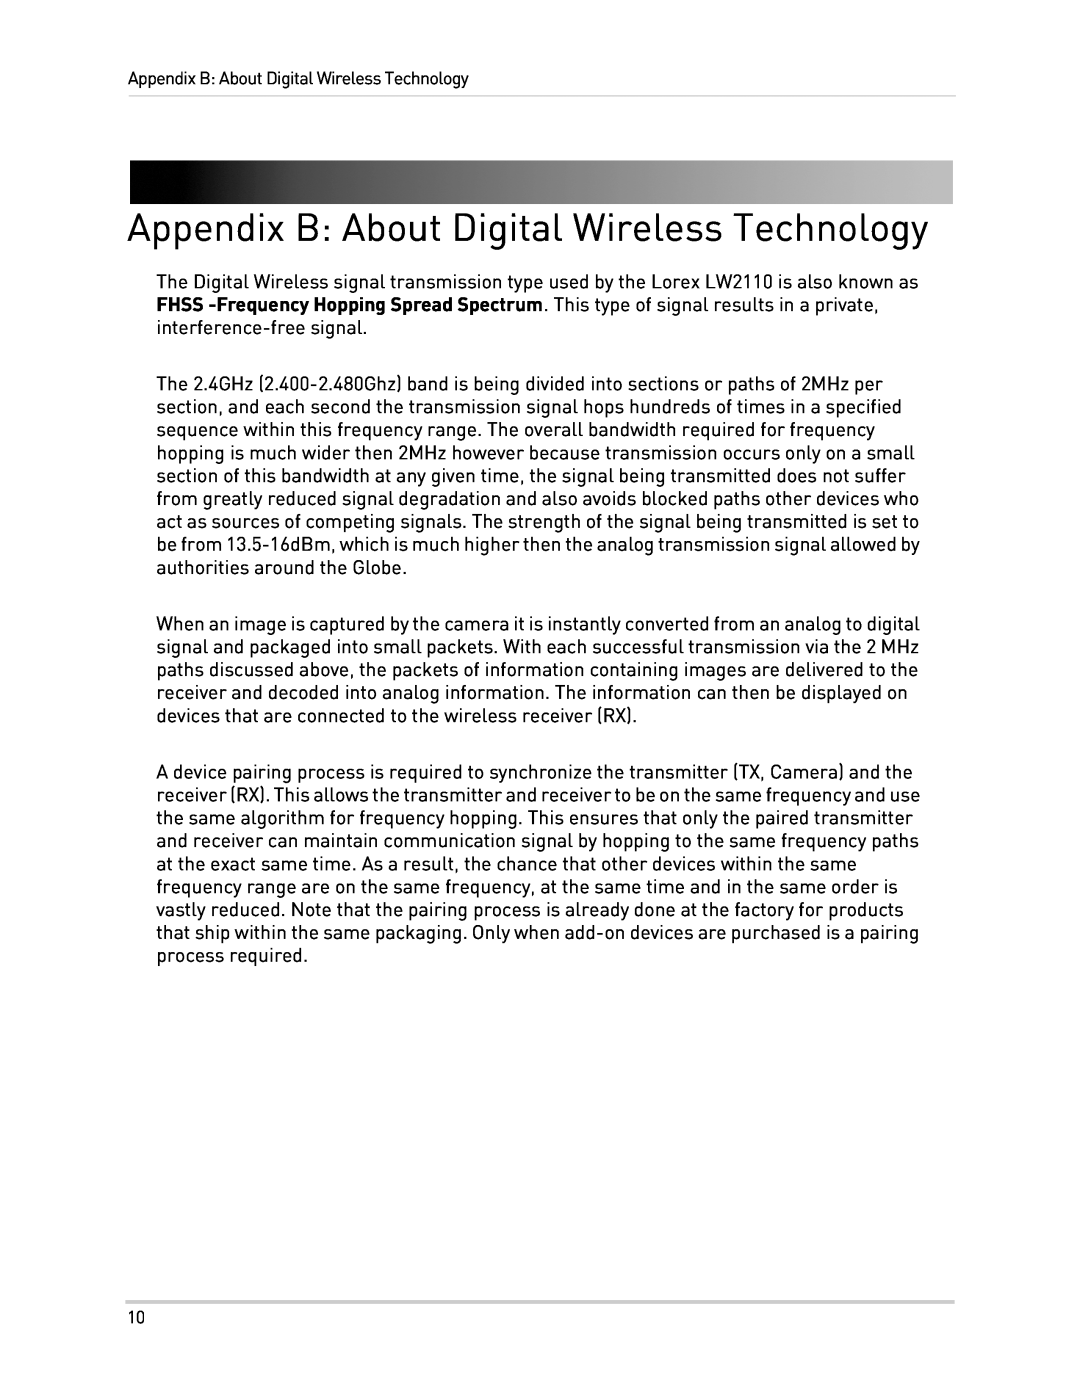 LOREX Technology LW2110 instruction manual Appendix B About Digital Wireless Technology 